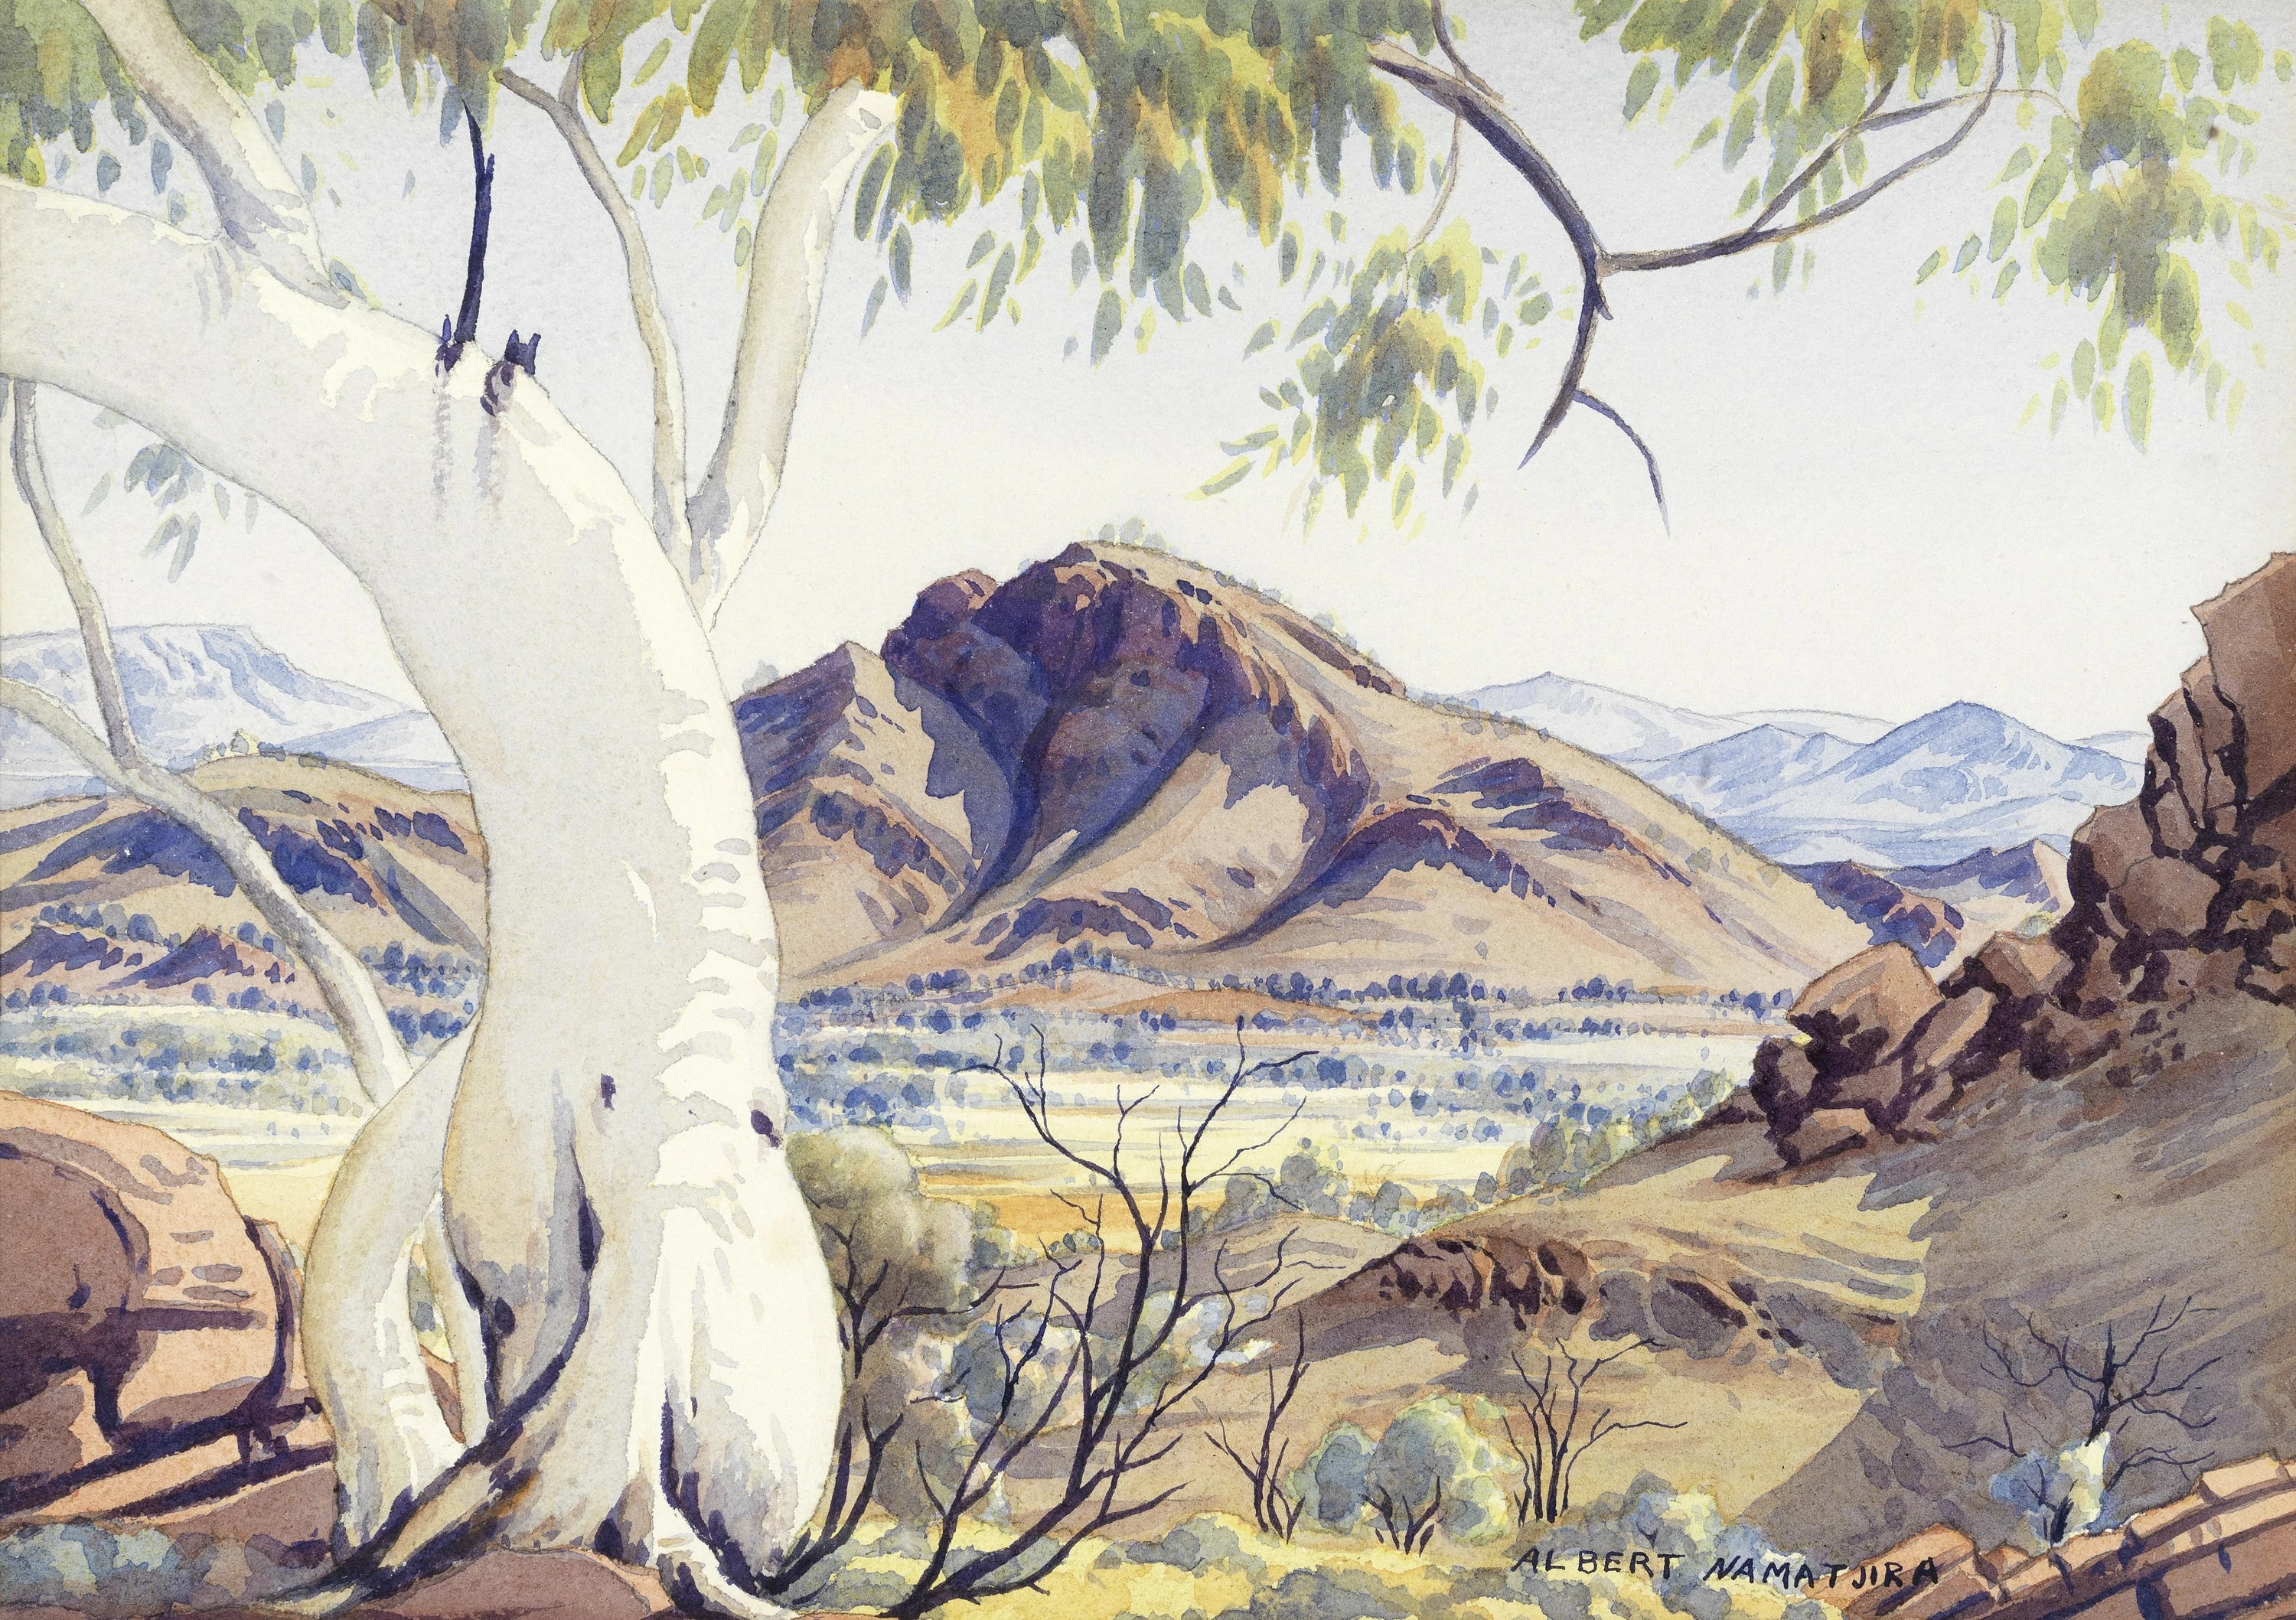 A ghost gum on Washwood Stn. (Mt. Bowman) near Haasts Bluff, Central Australia, Albert Namatjira